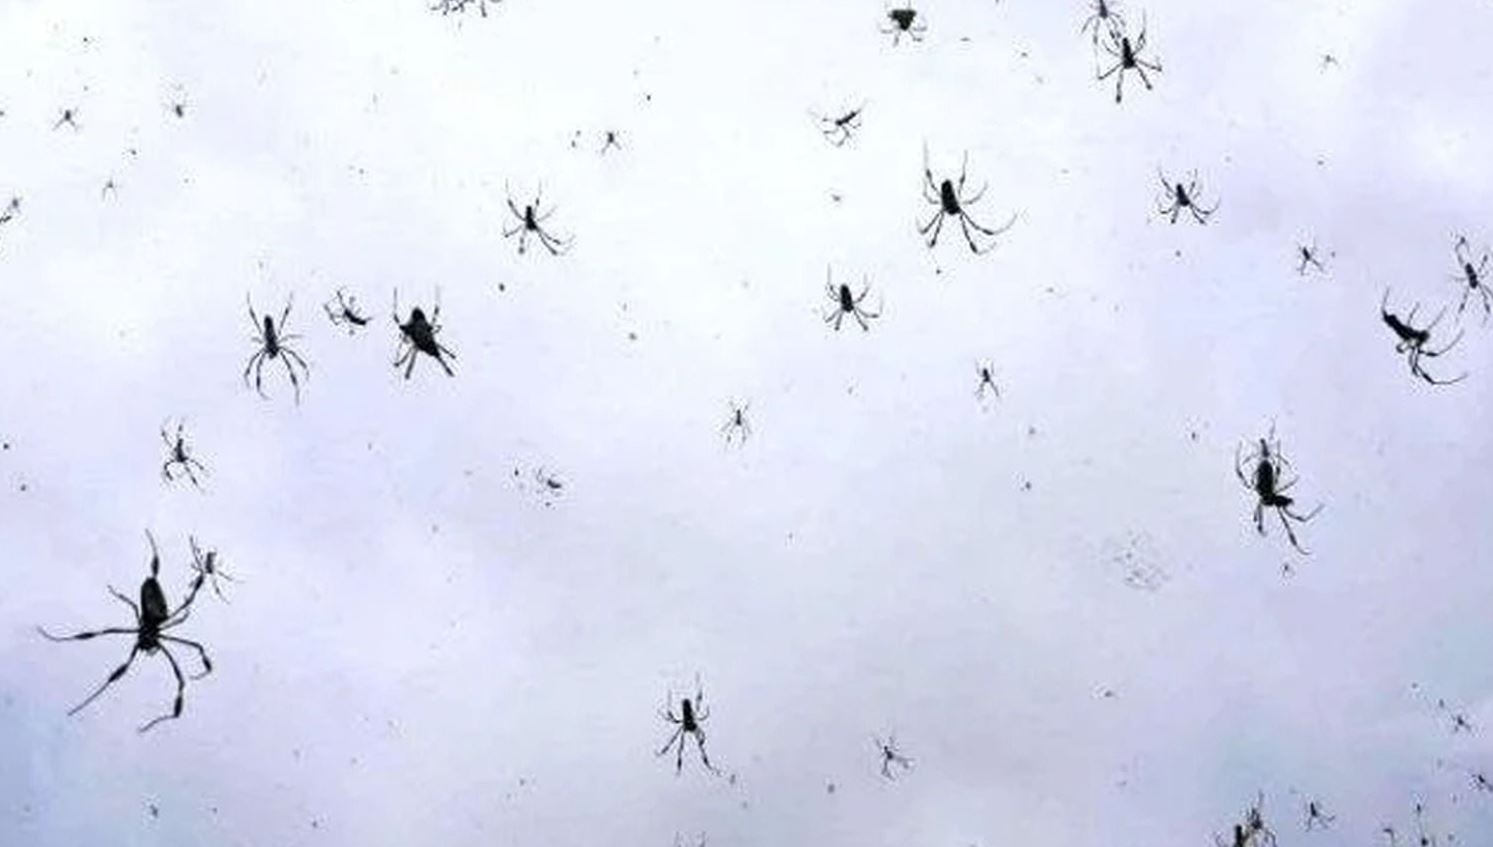 Captan en video impactante lluvia de arañas en Brasil